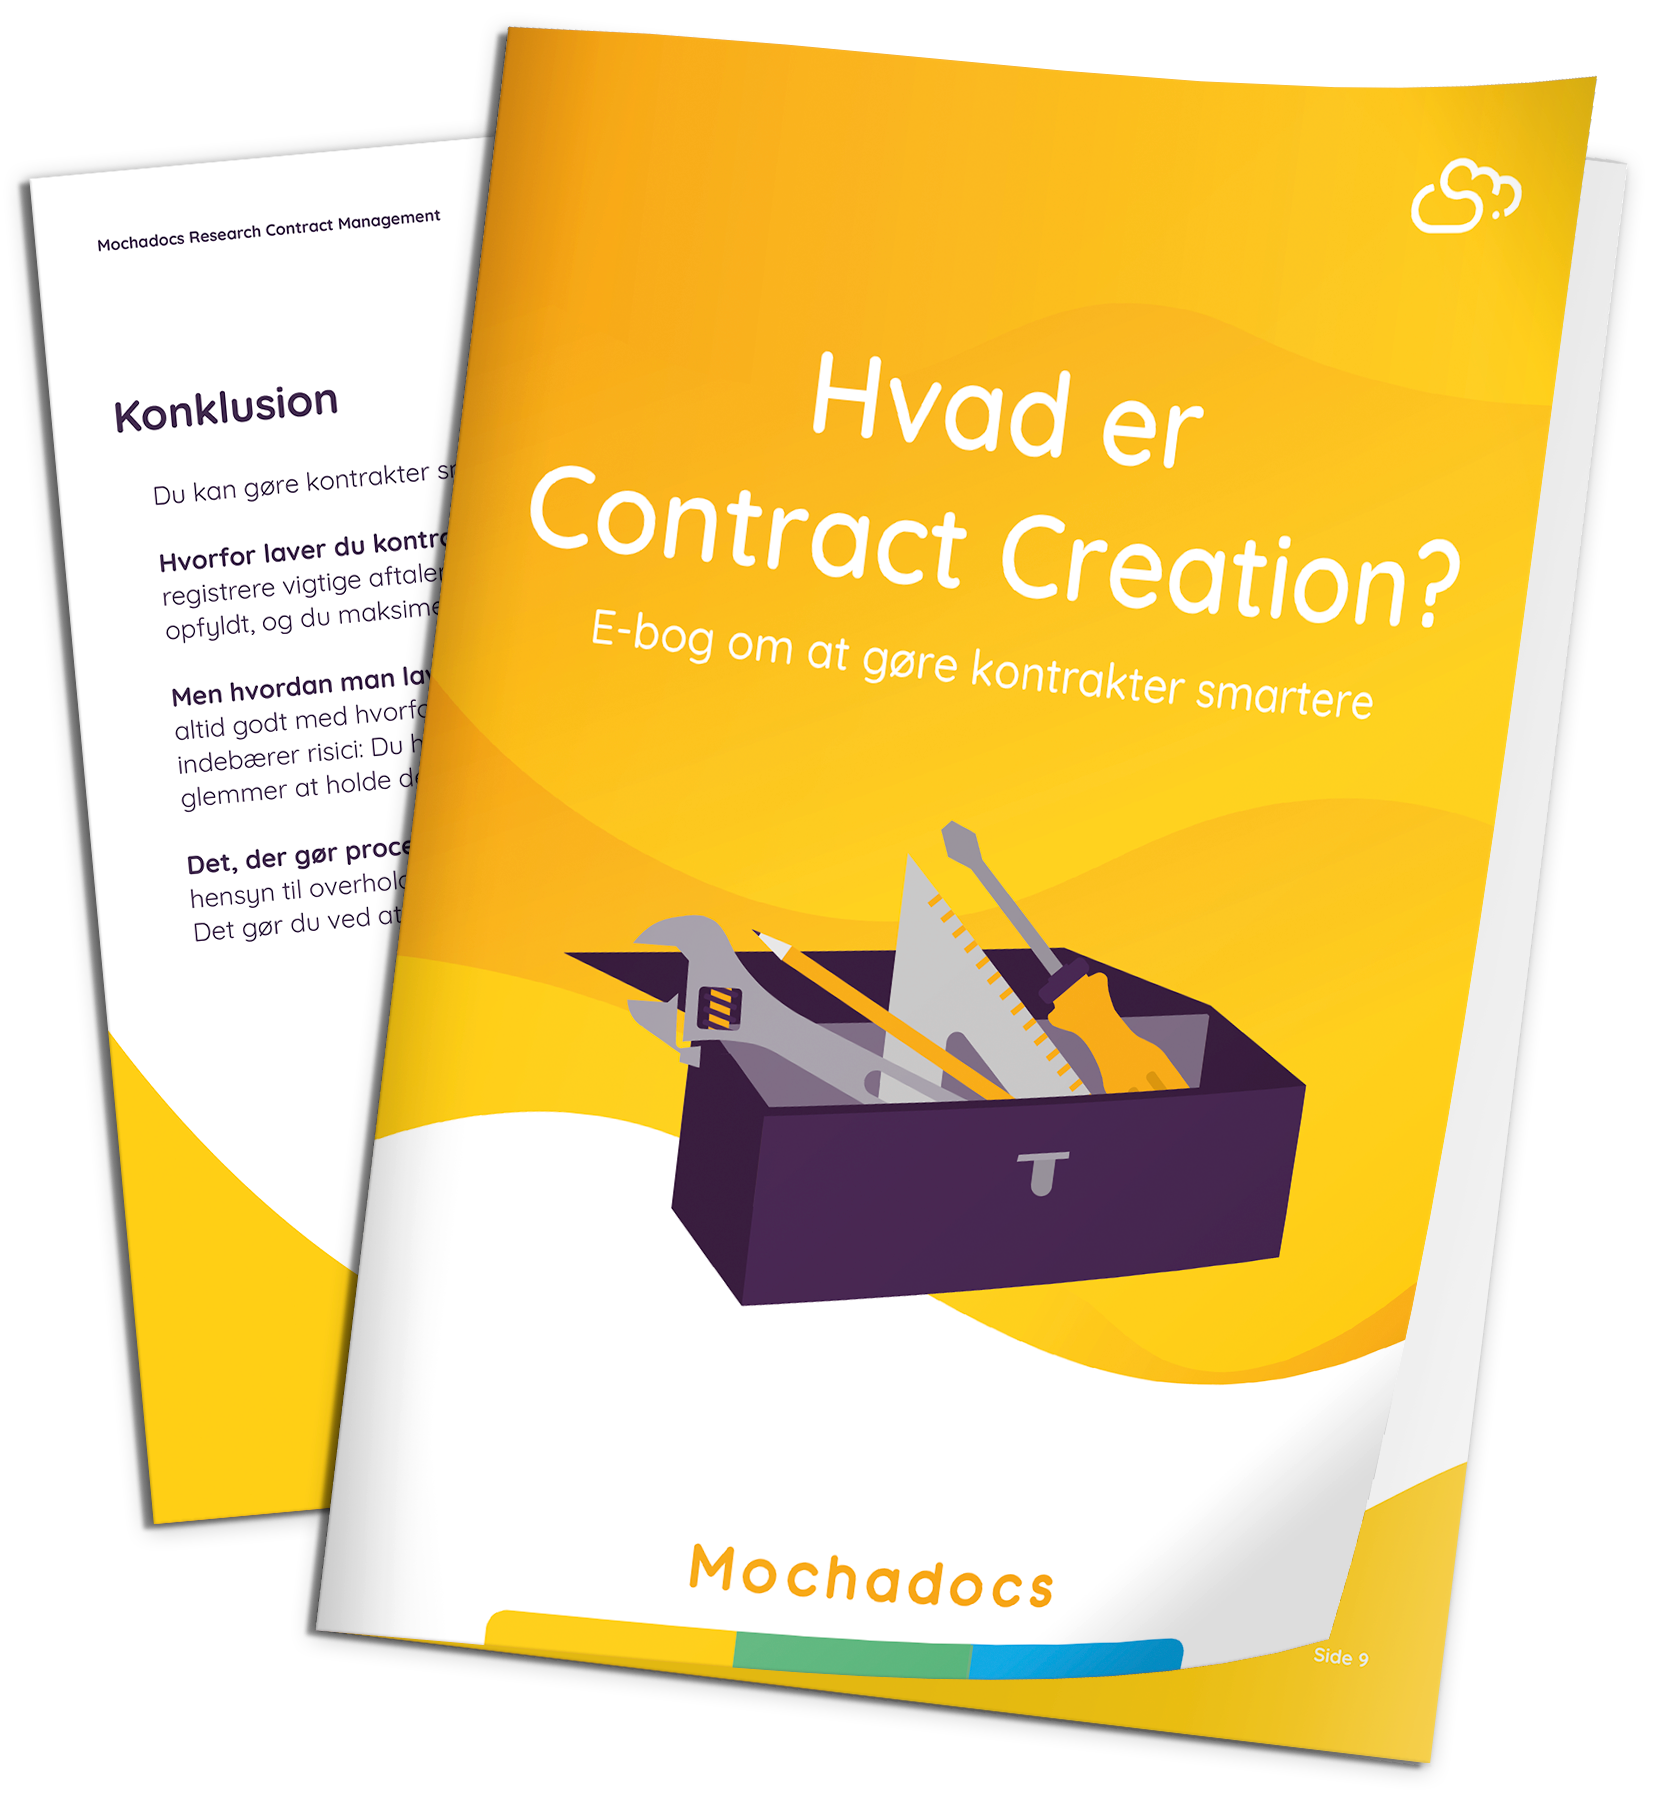 Mochadocs - Contract Creation - Hvad er Contract Creation?